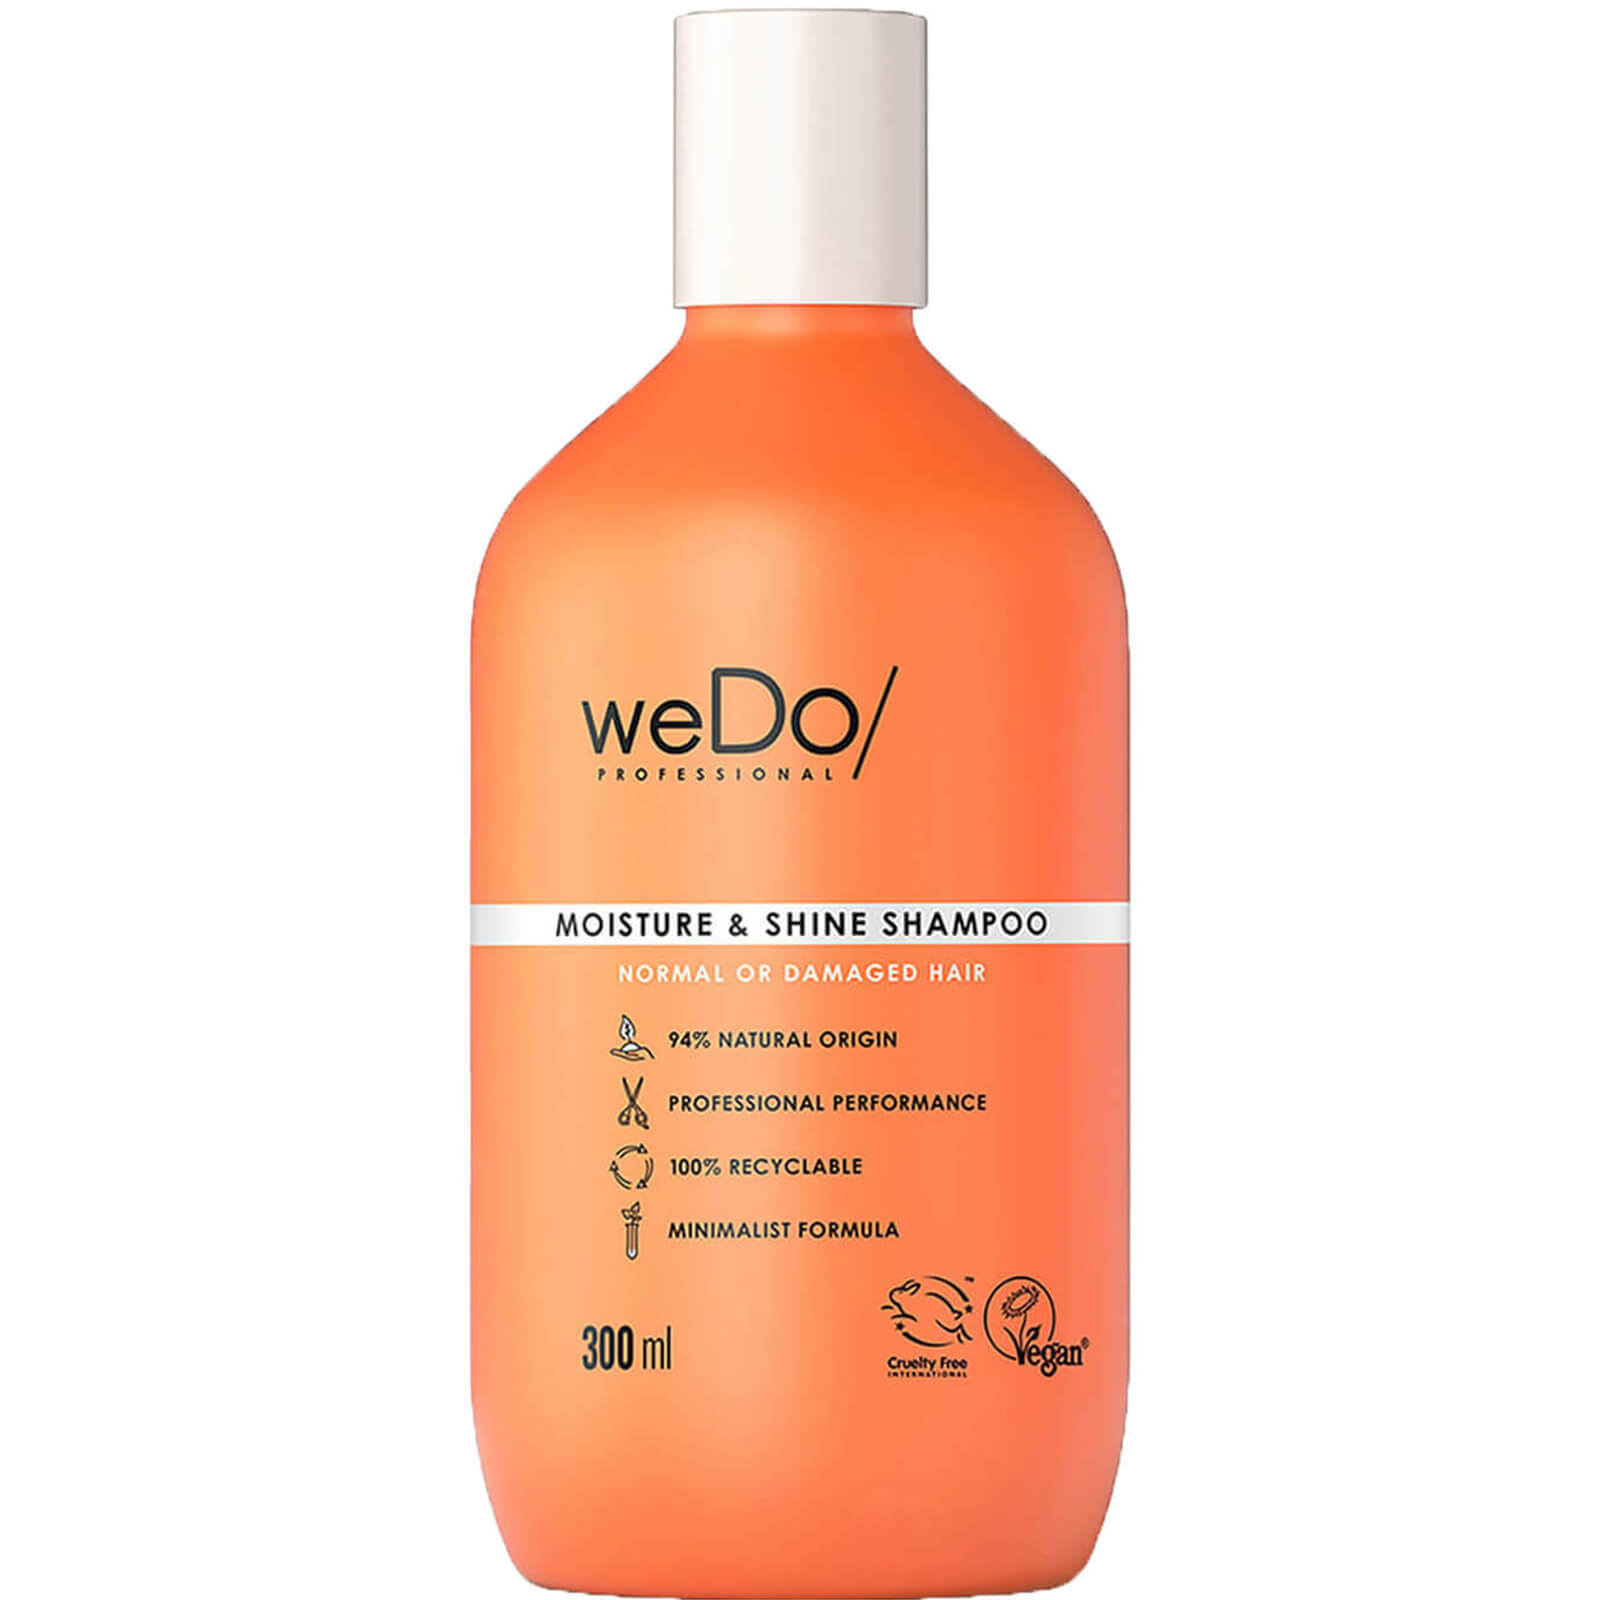 Image of weDo/ Professional Moisture and Shine Shampoo 300ml